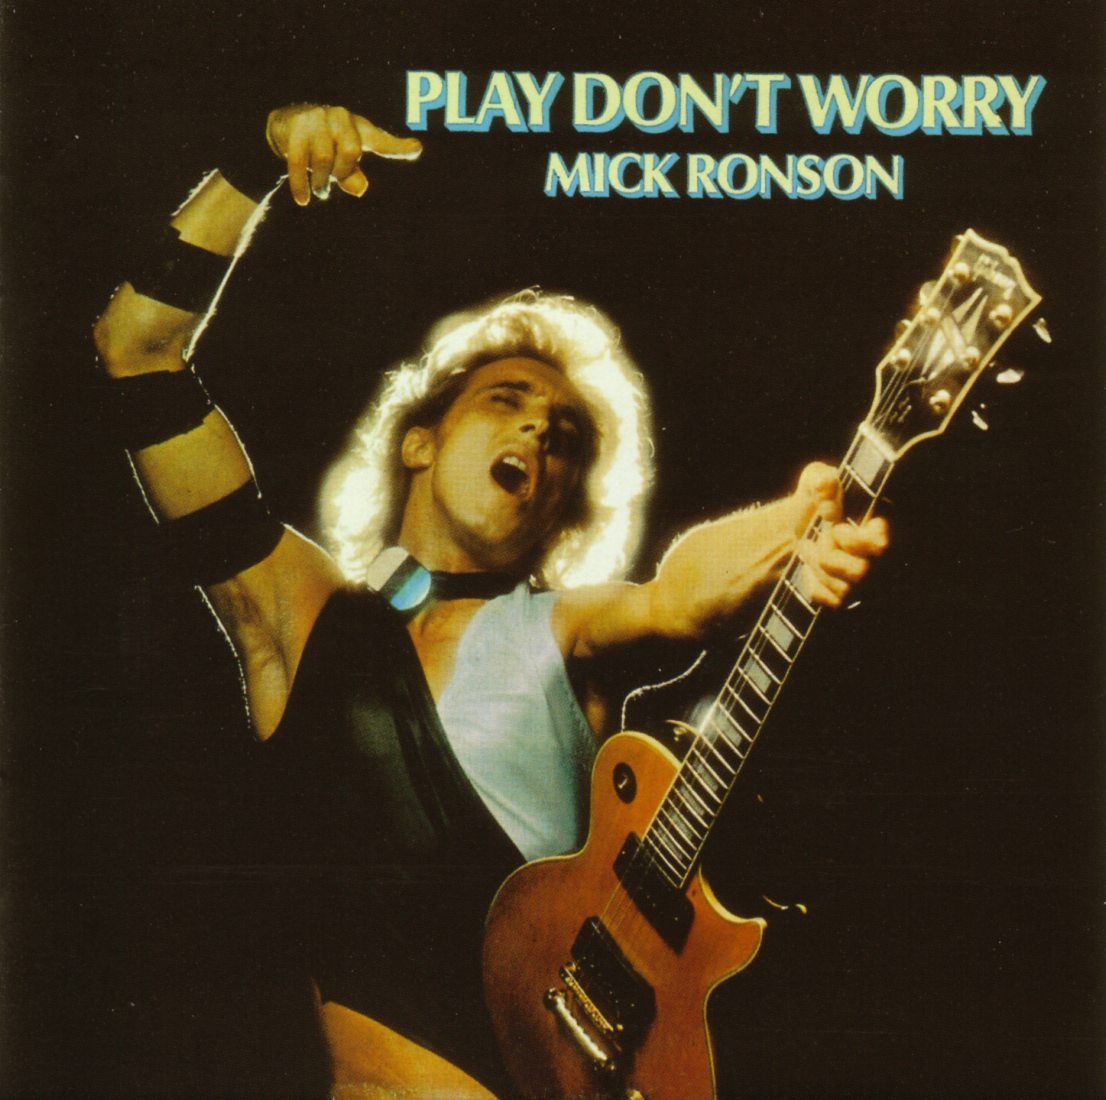 ¿Qué Estás Escuchando? - Página 37 Mick+ronson+play+don't+worry+front.